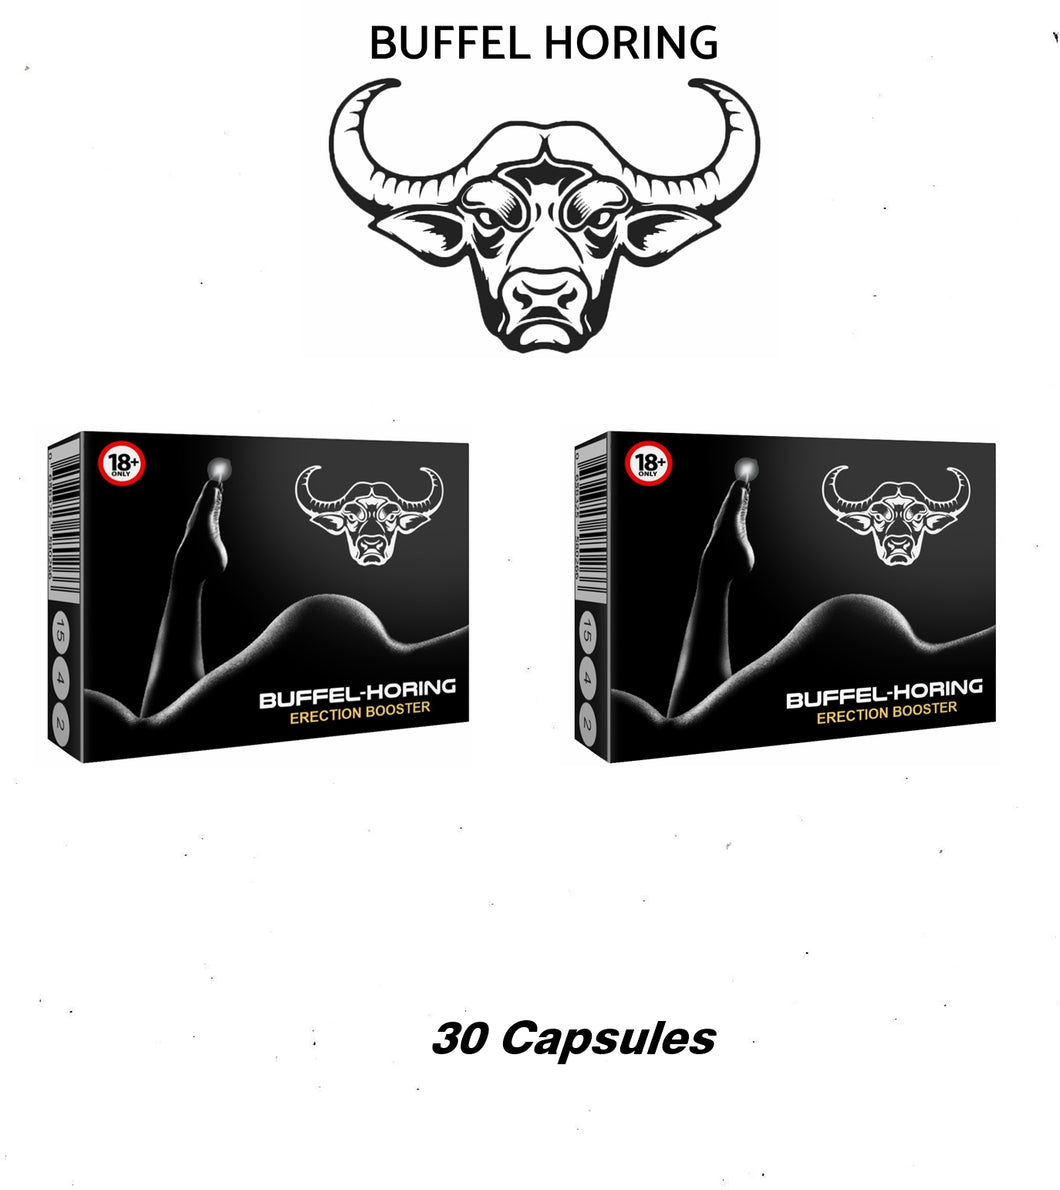 Buffel-Horing (2 Boxes) - 30 Capsules